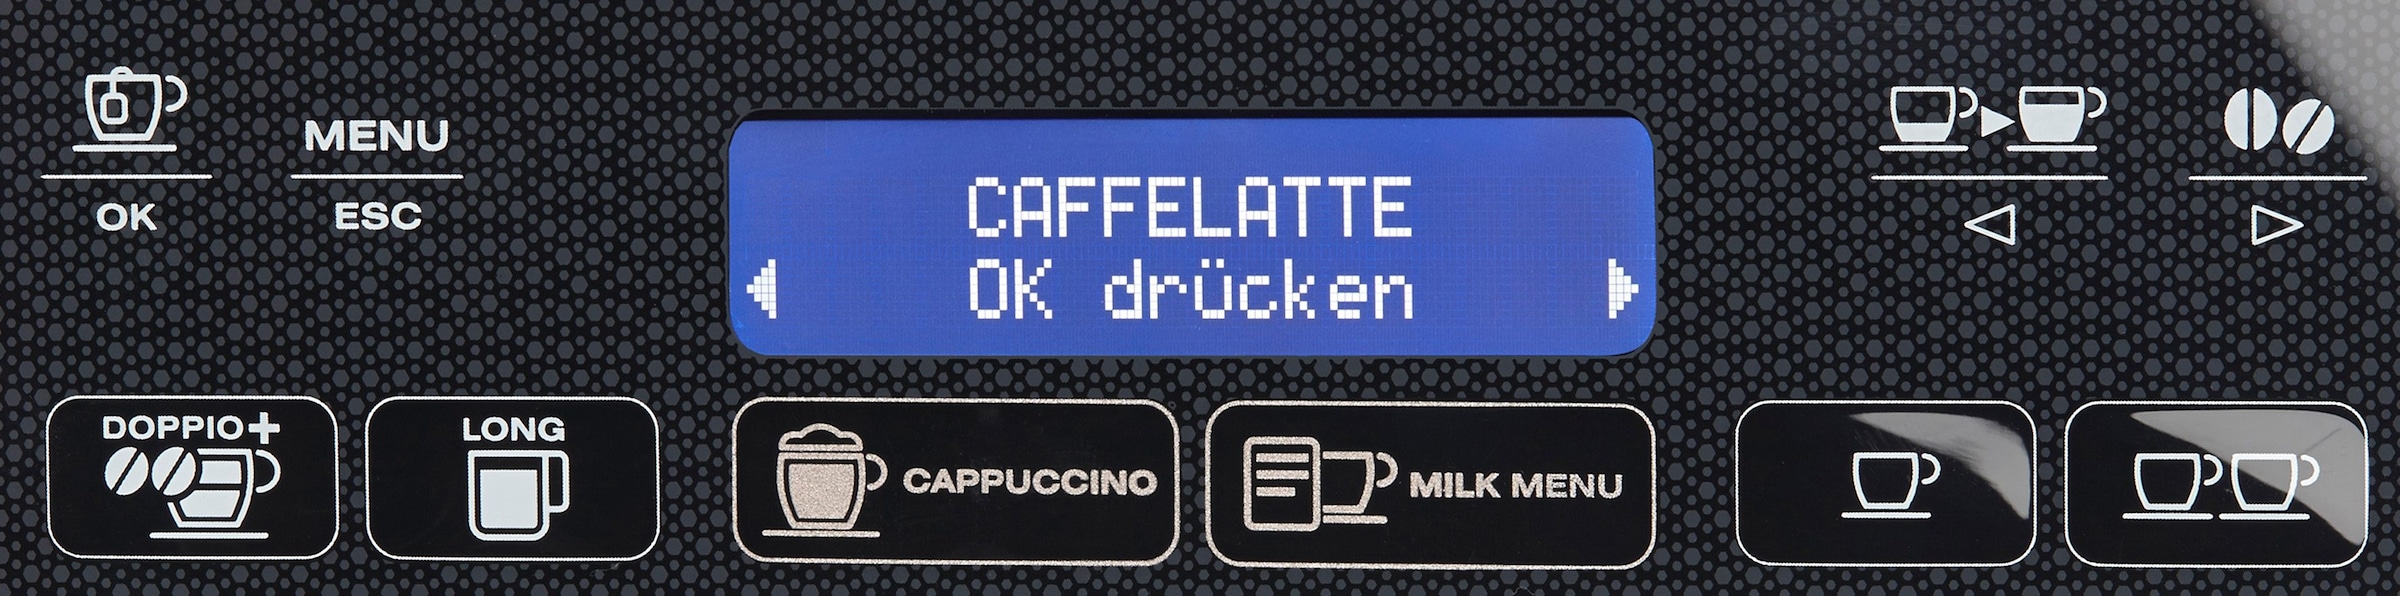 De'Longhi Kaffeevollautomat »Autentica Cappuccino ETAM 29.660.SB«, nur 19,5 cm breit, LatteCrema Milchsystem